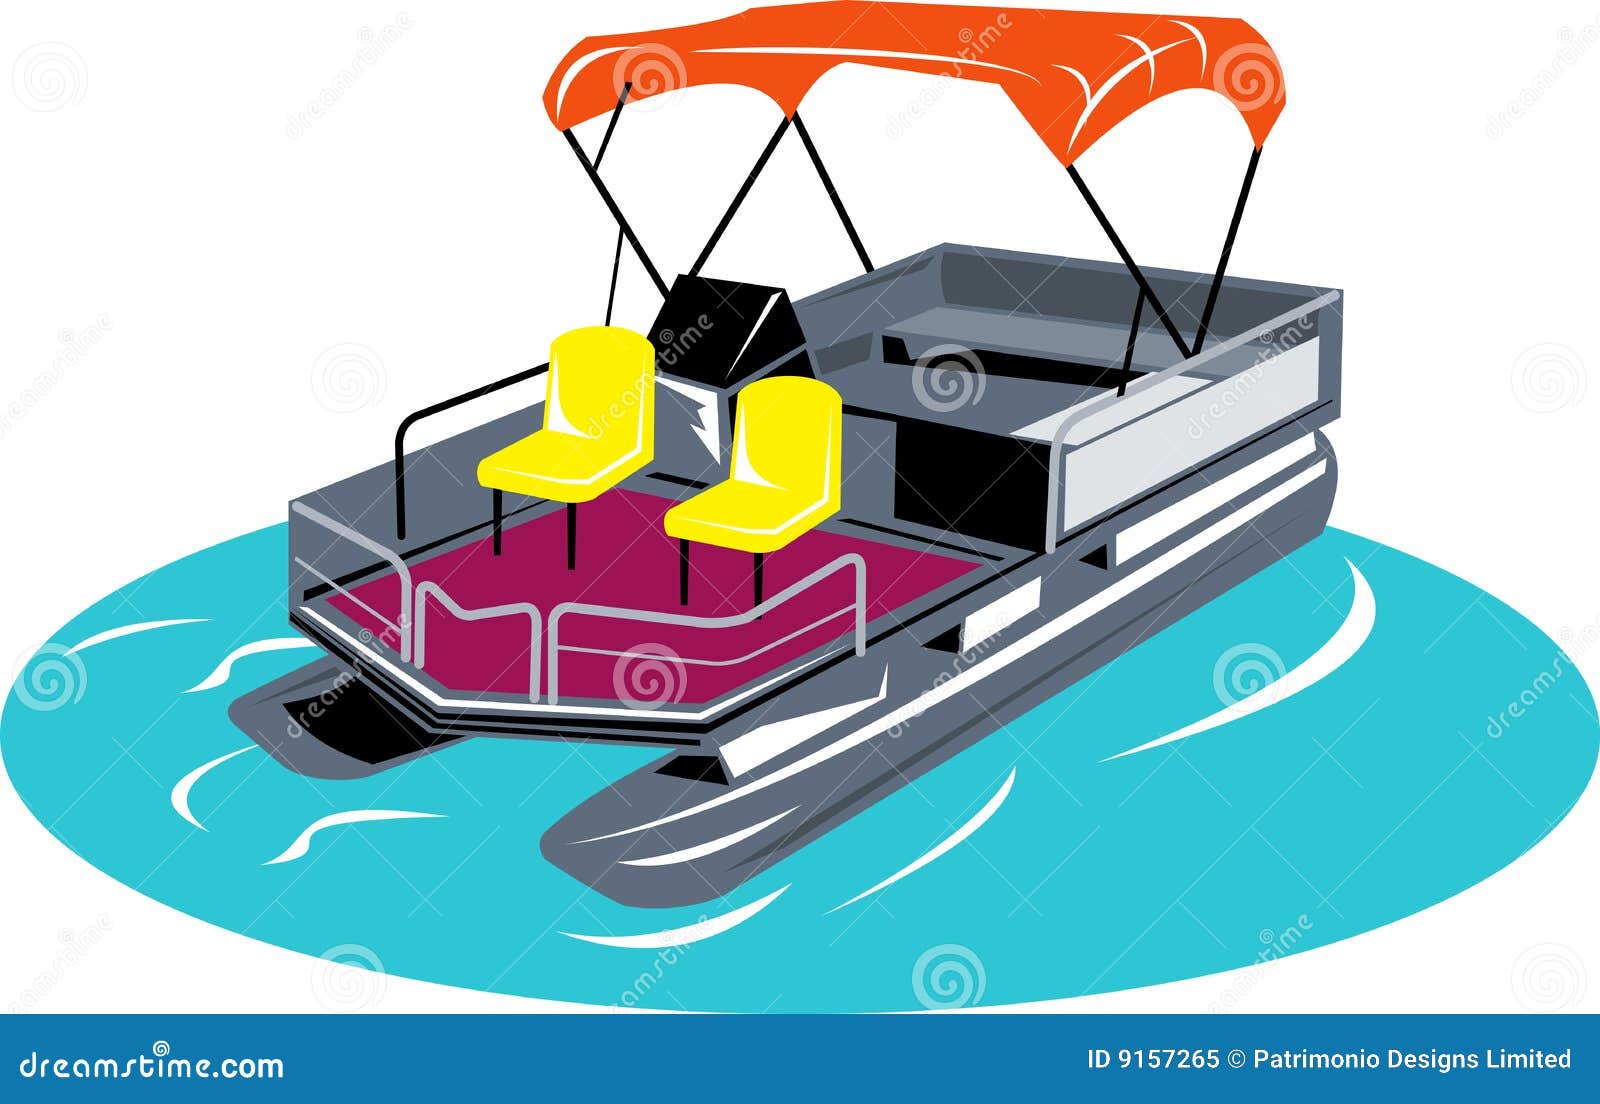 Pontoon boat stock illustration. Illustration of sailing - 9157265